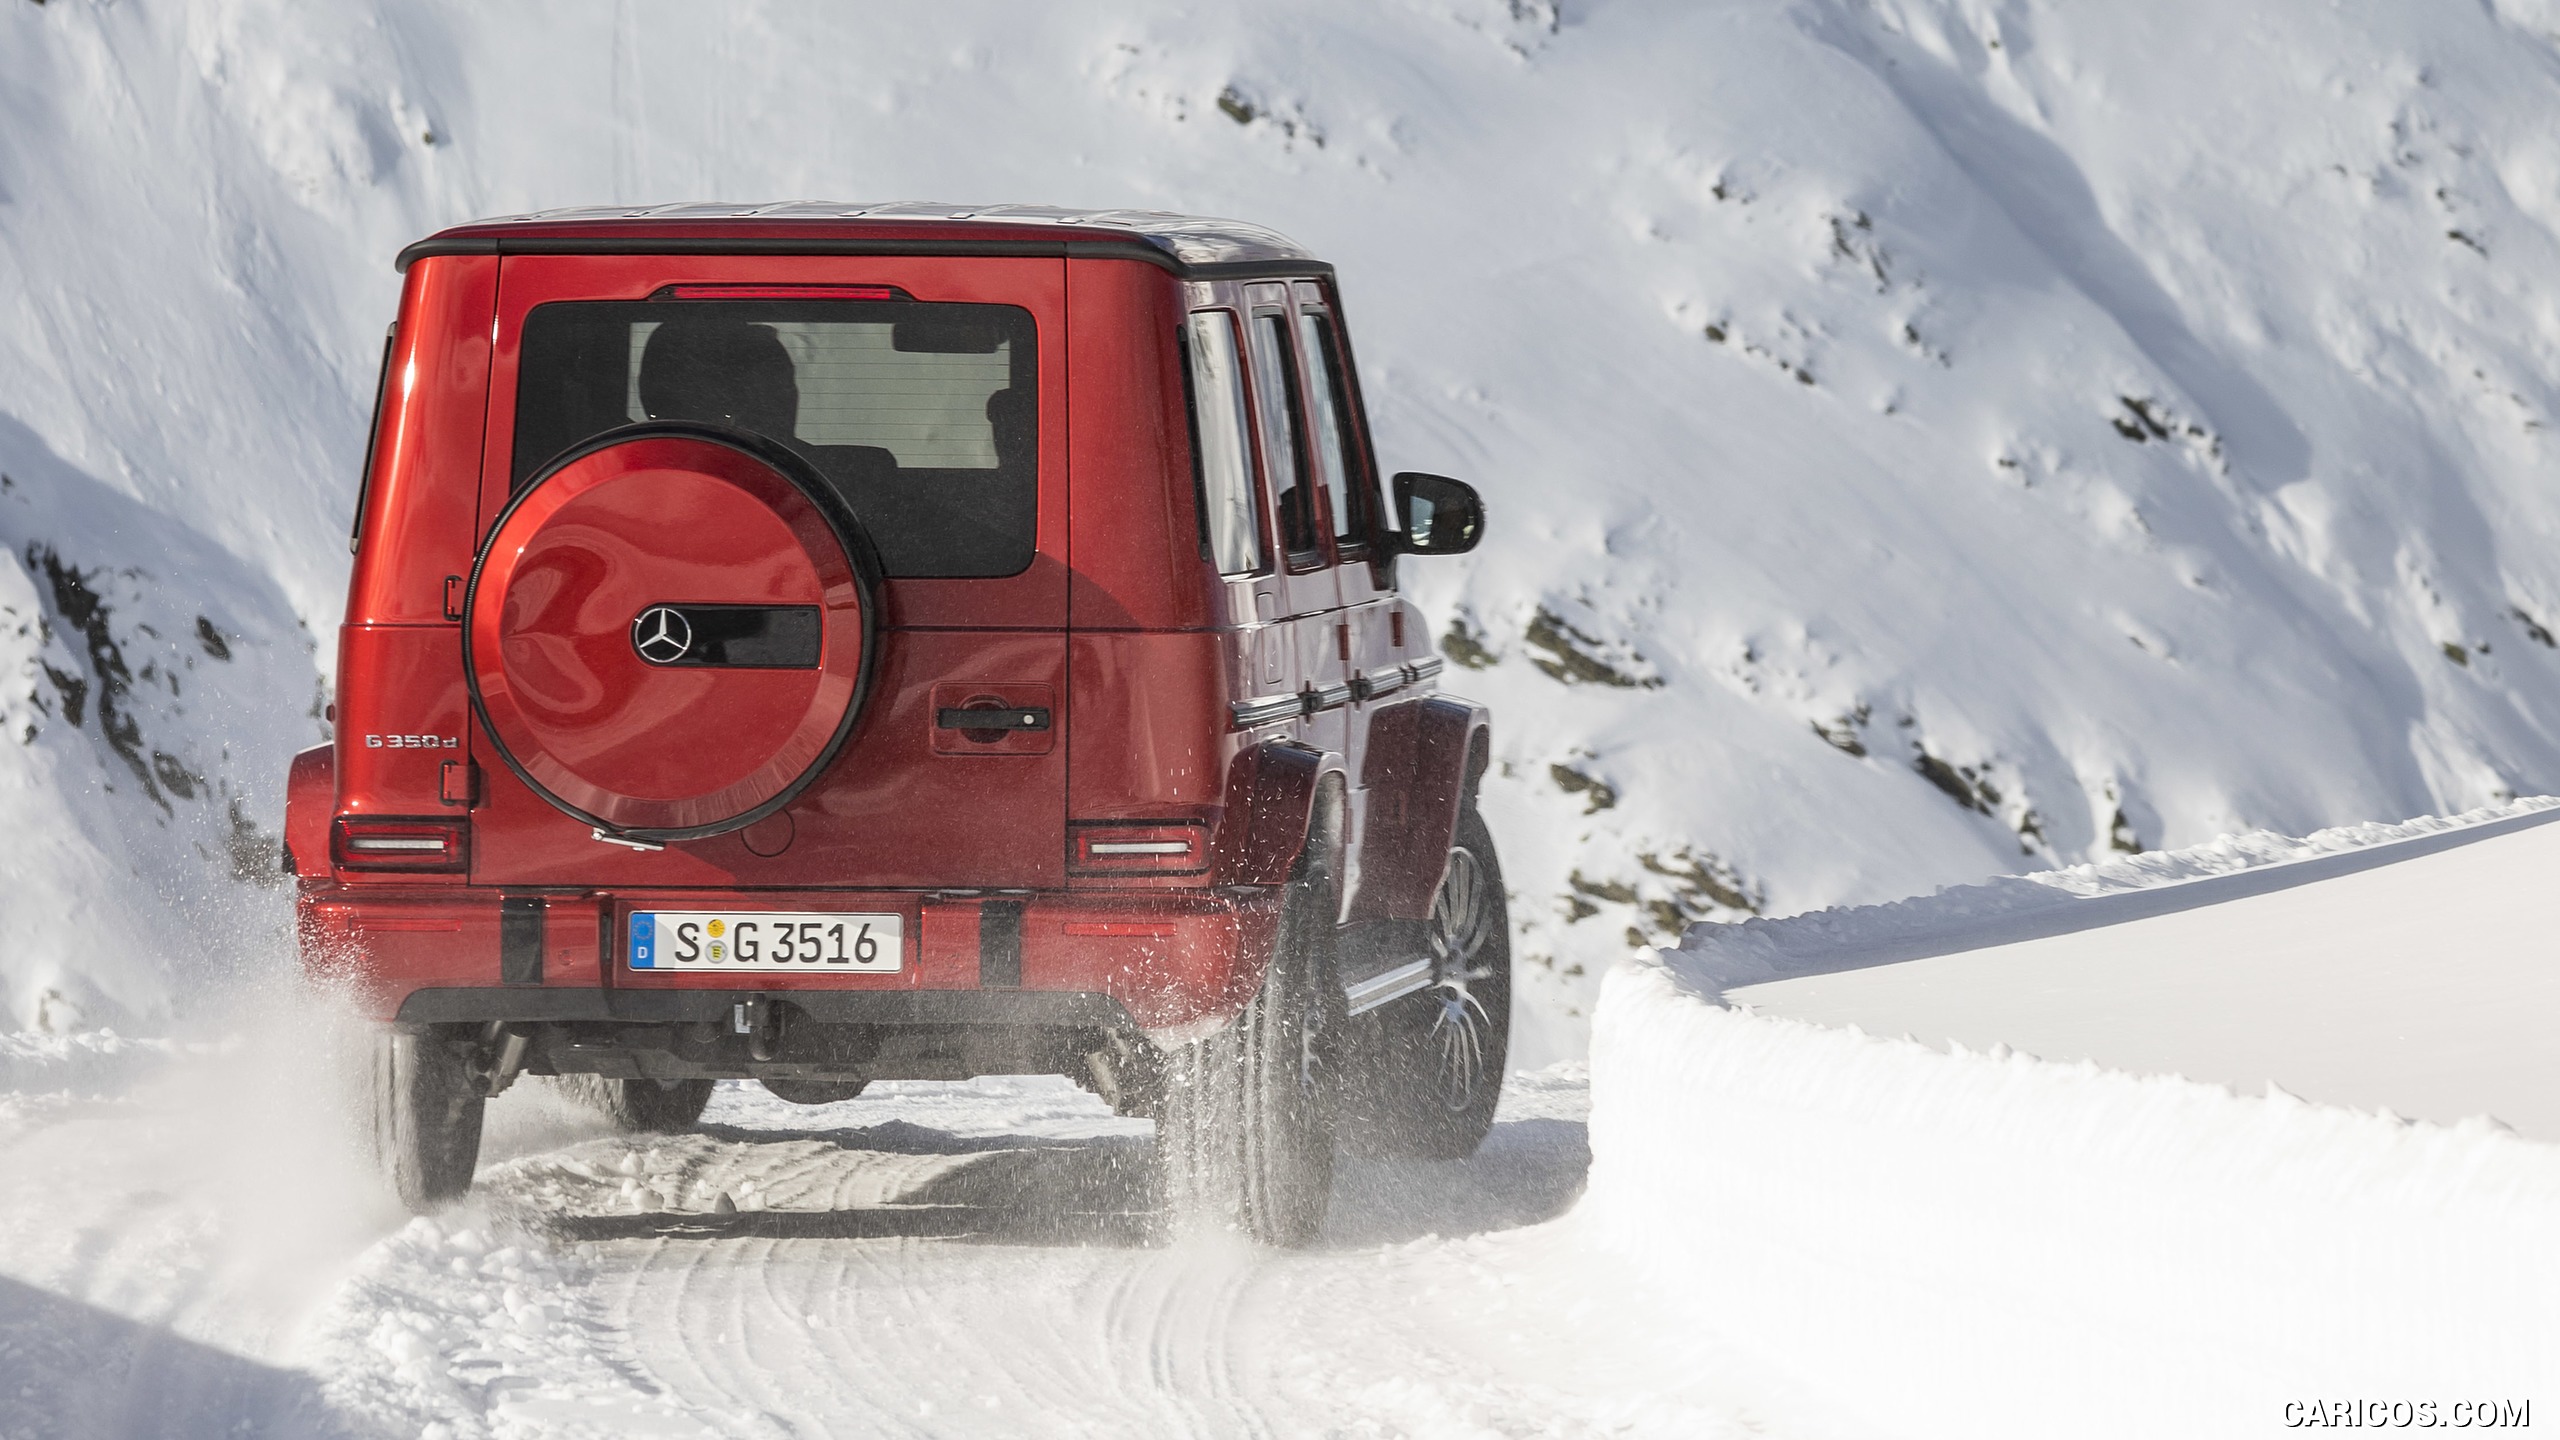 2019 Mercedes-Benz G 350 d (Designo Hyazinth Red Metallic) - In Snow - Rear, #6 of 51